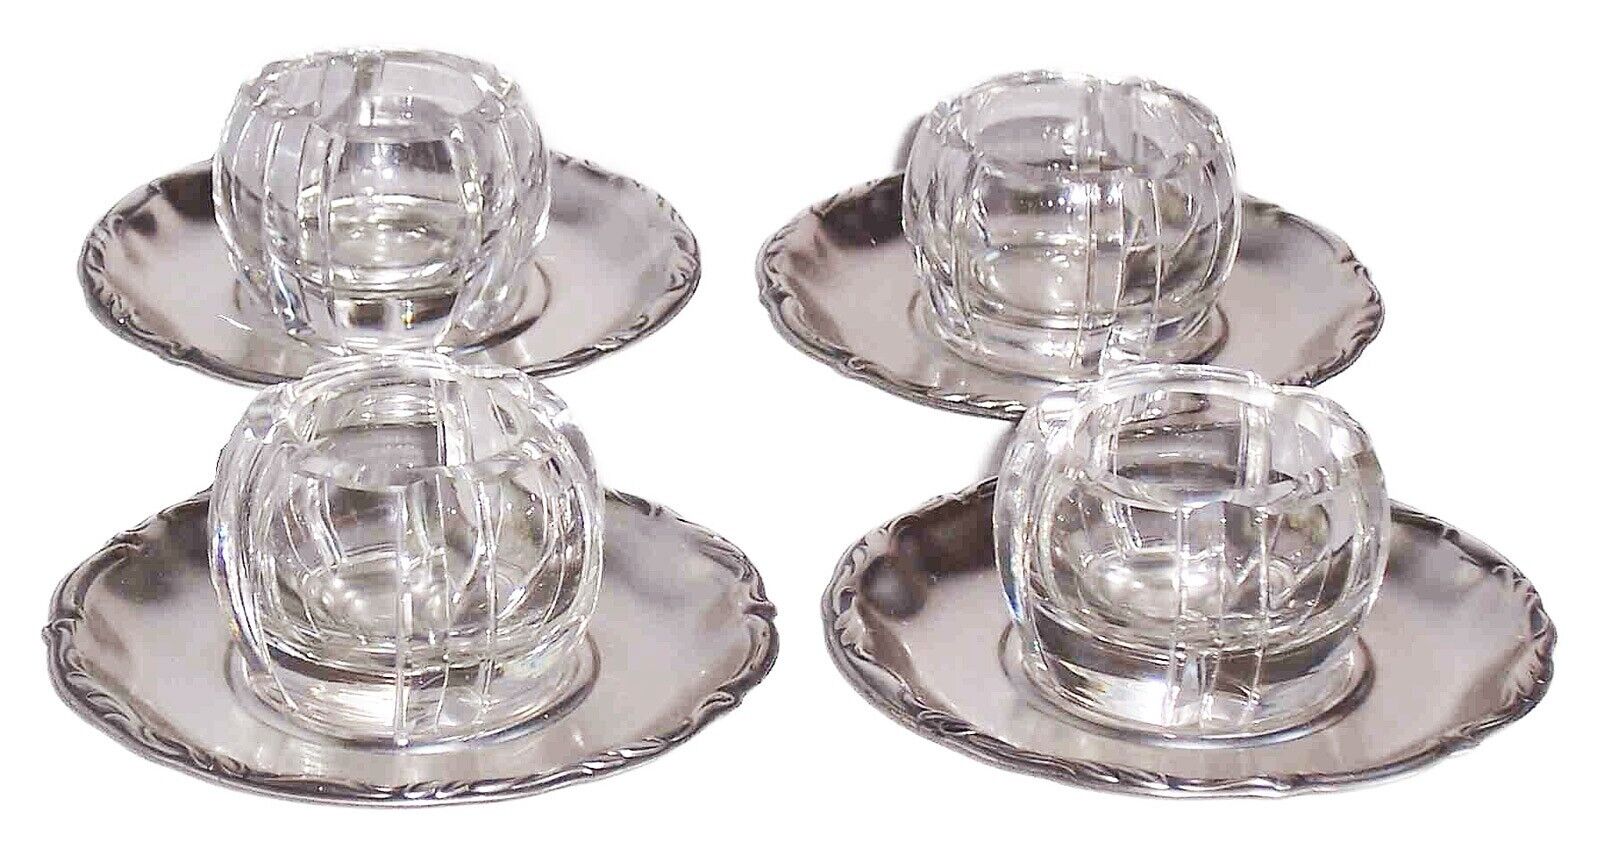 Vintage Heavy Glass Salt Cellars with Pewter-Like Saucers – Set of 4